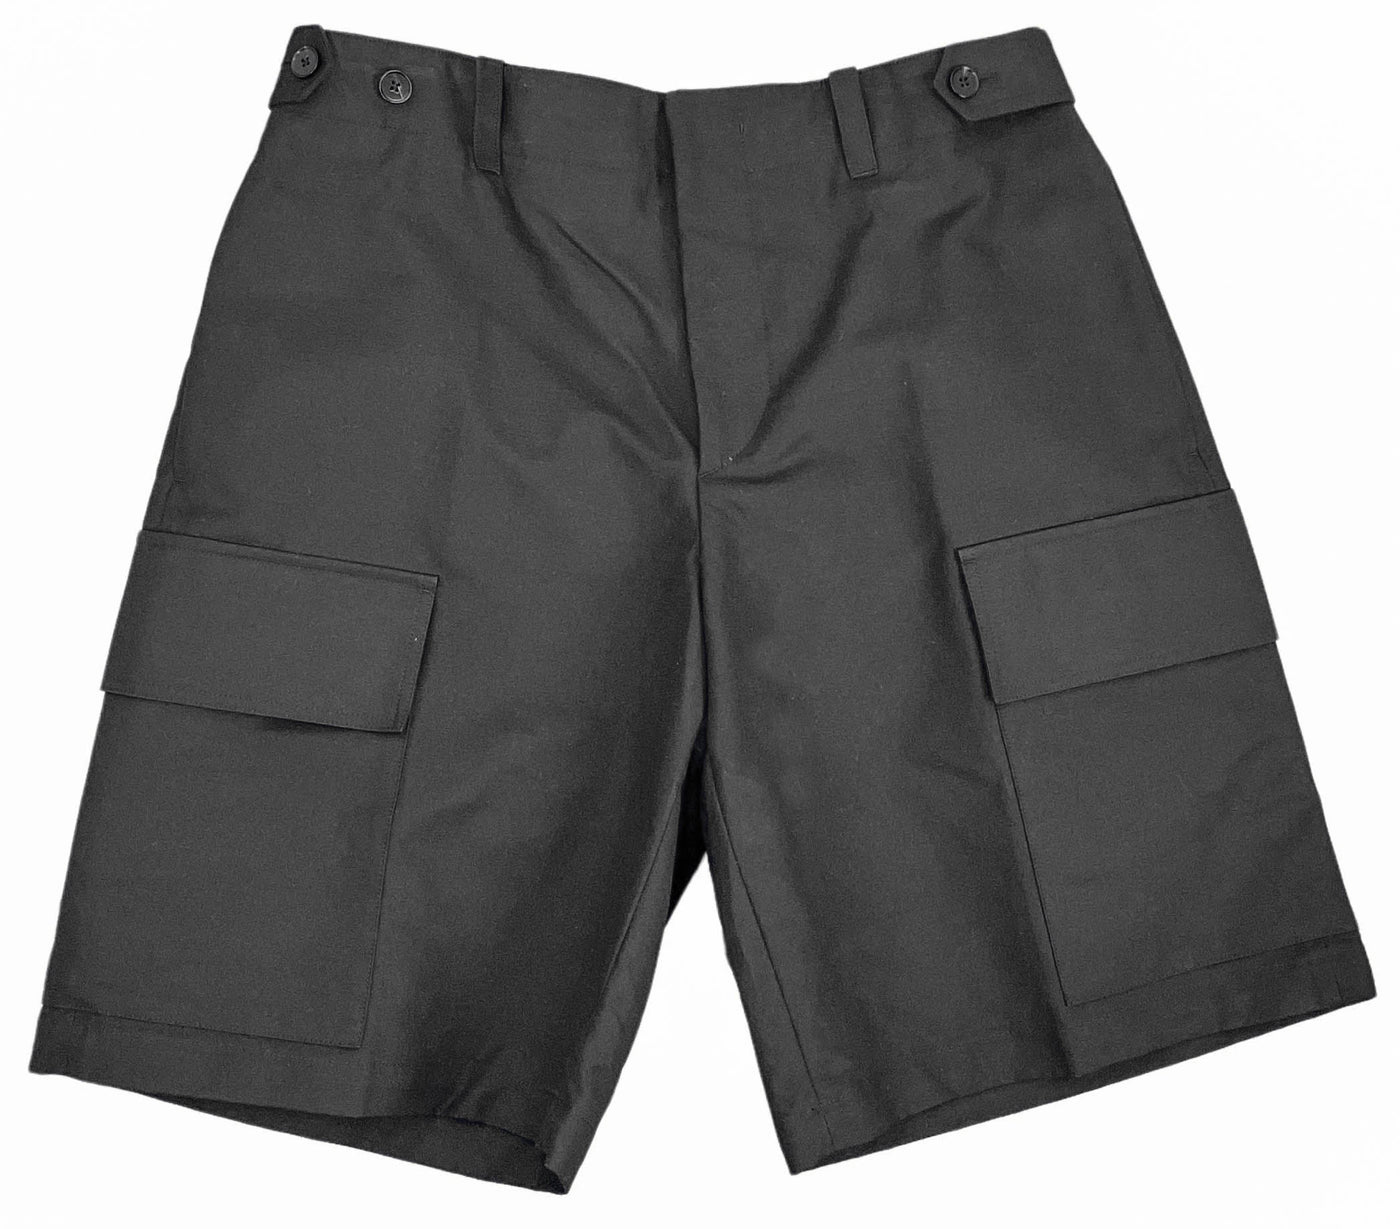 Jil Sander Double Cotton Cargo Shorts in Black - Discounts on Jil Sander at UAL